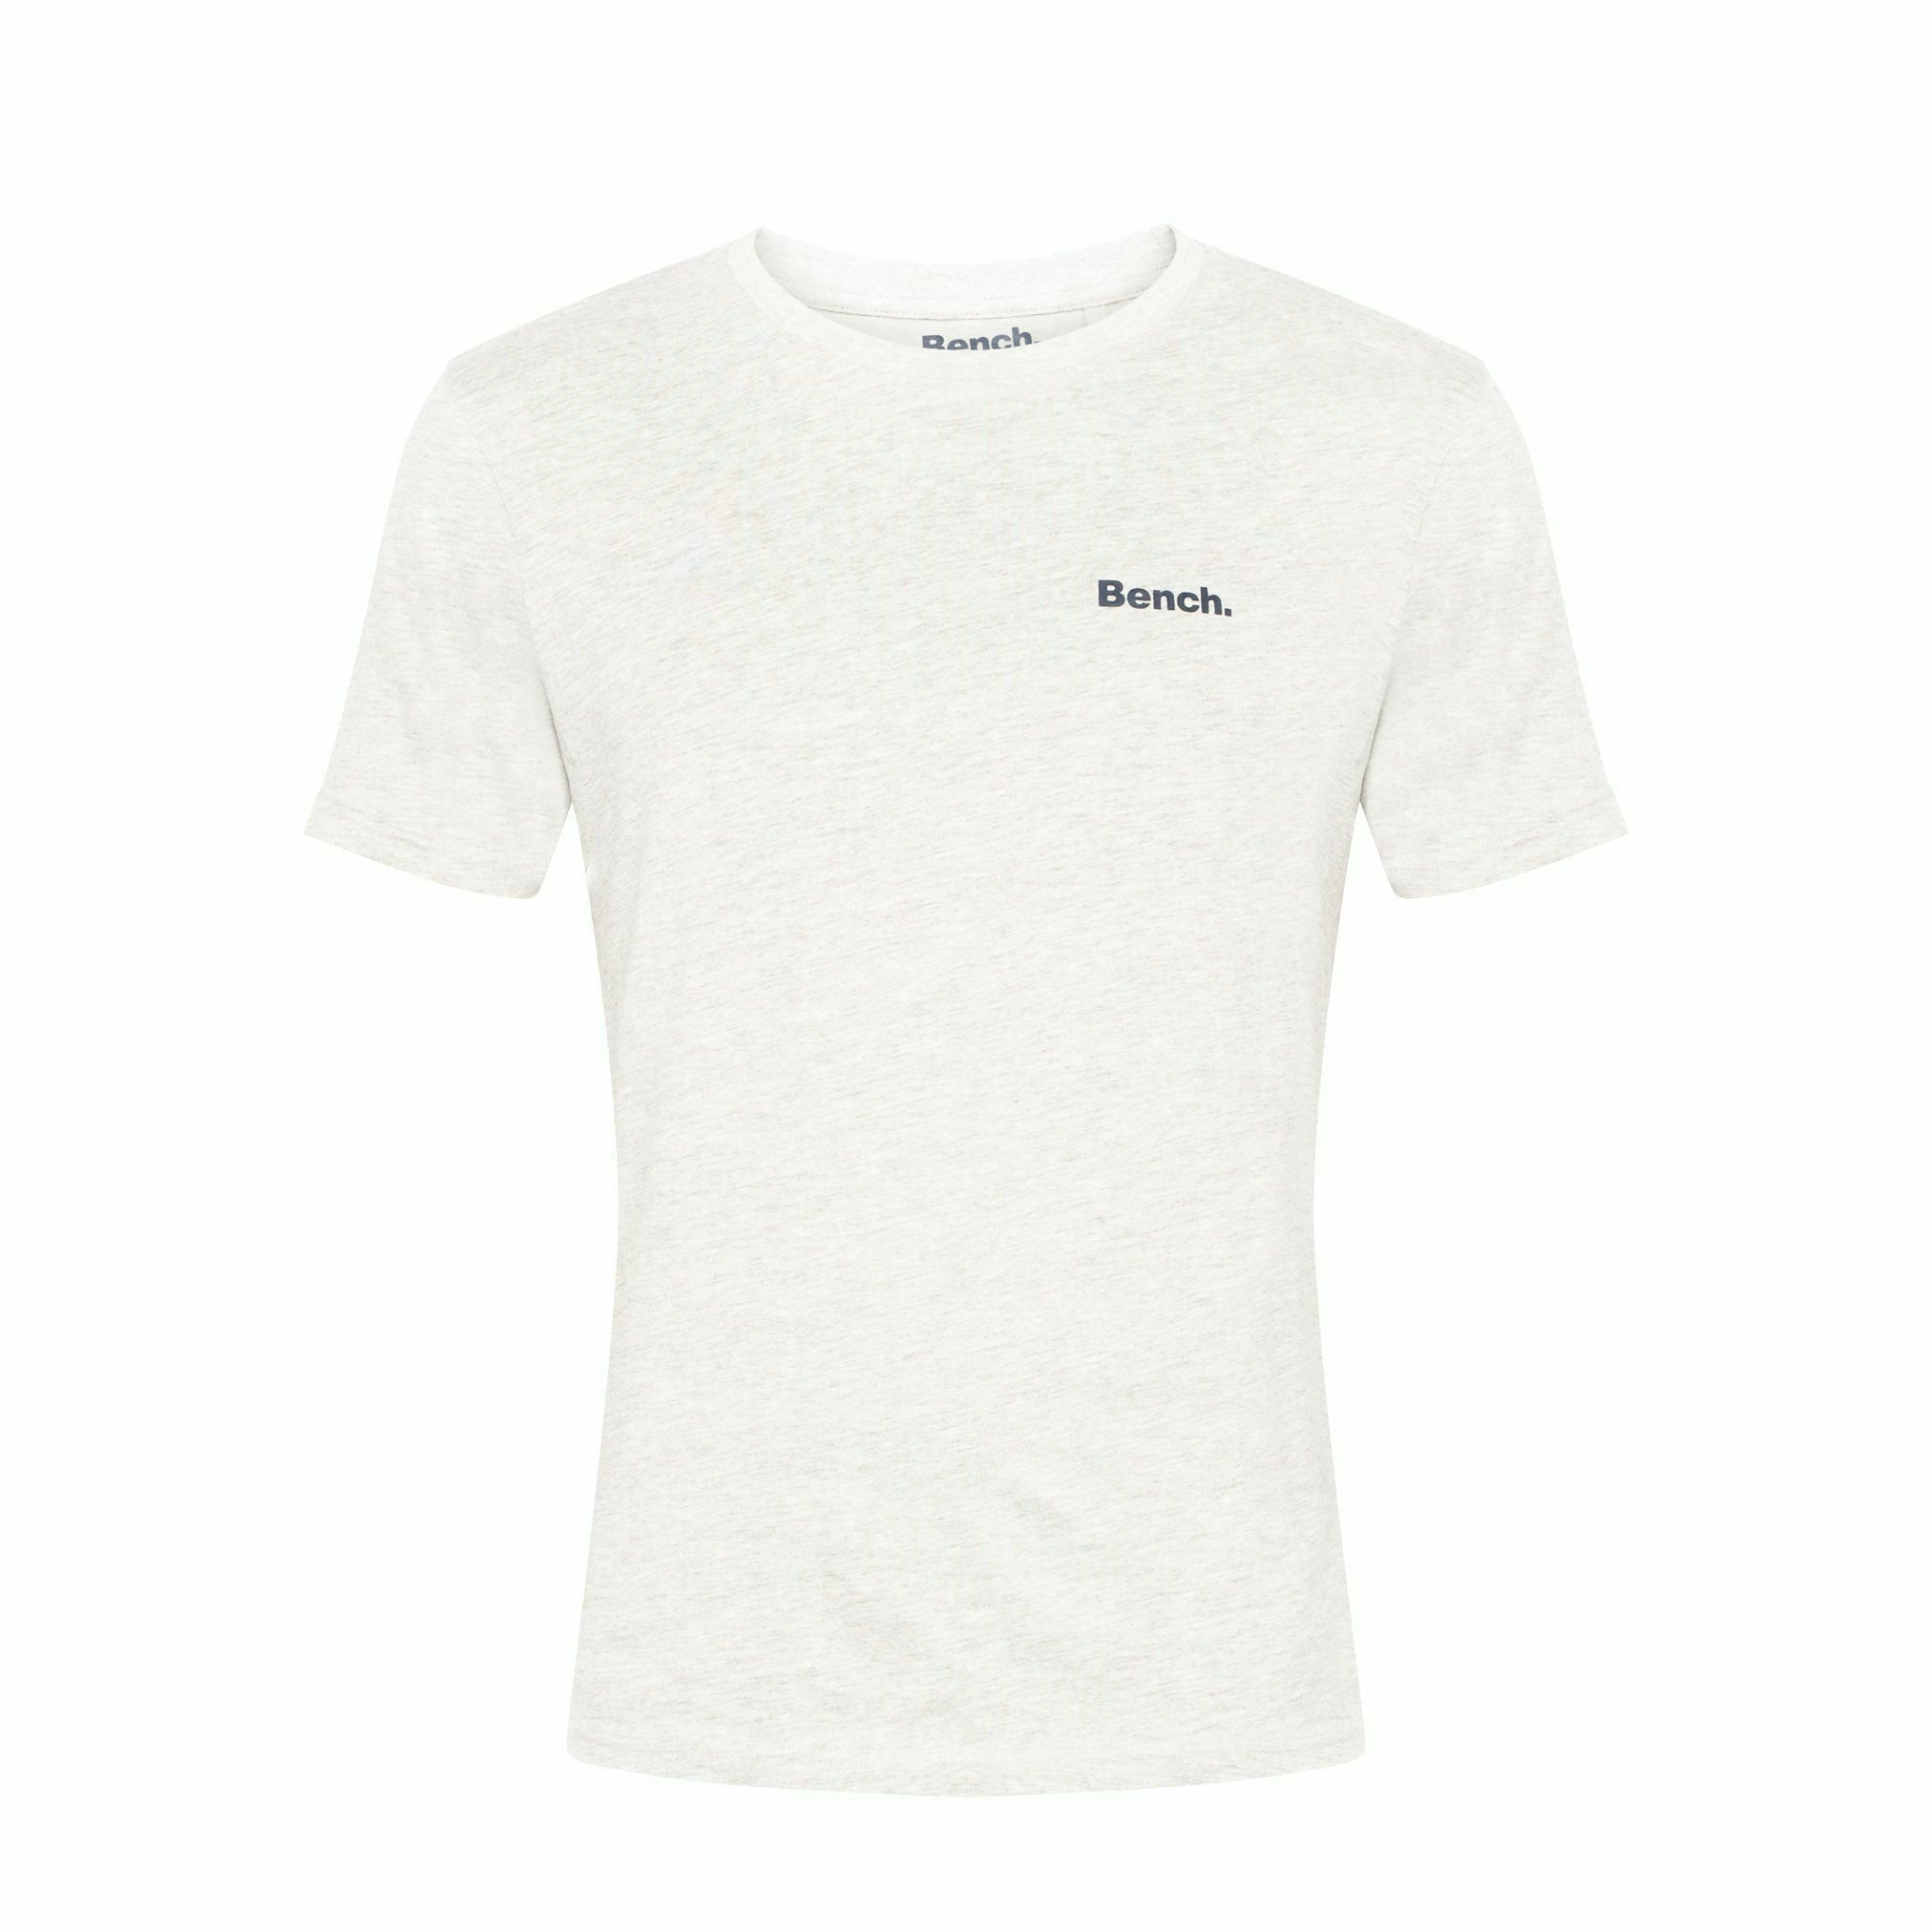 Mens 'ISAAC' 10 Pack T-Shirt Set - ASSORTED - Shop at www.Bench.co.uk #LoveMyHood